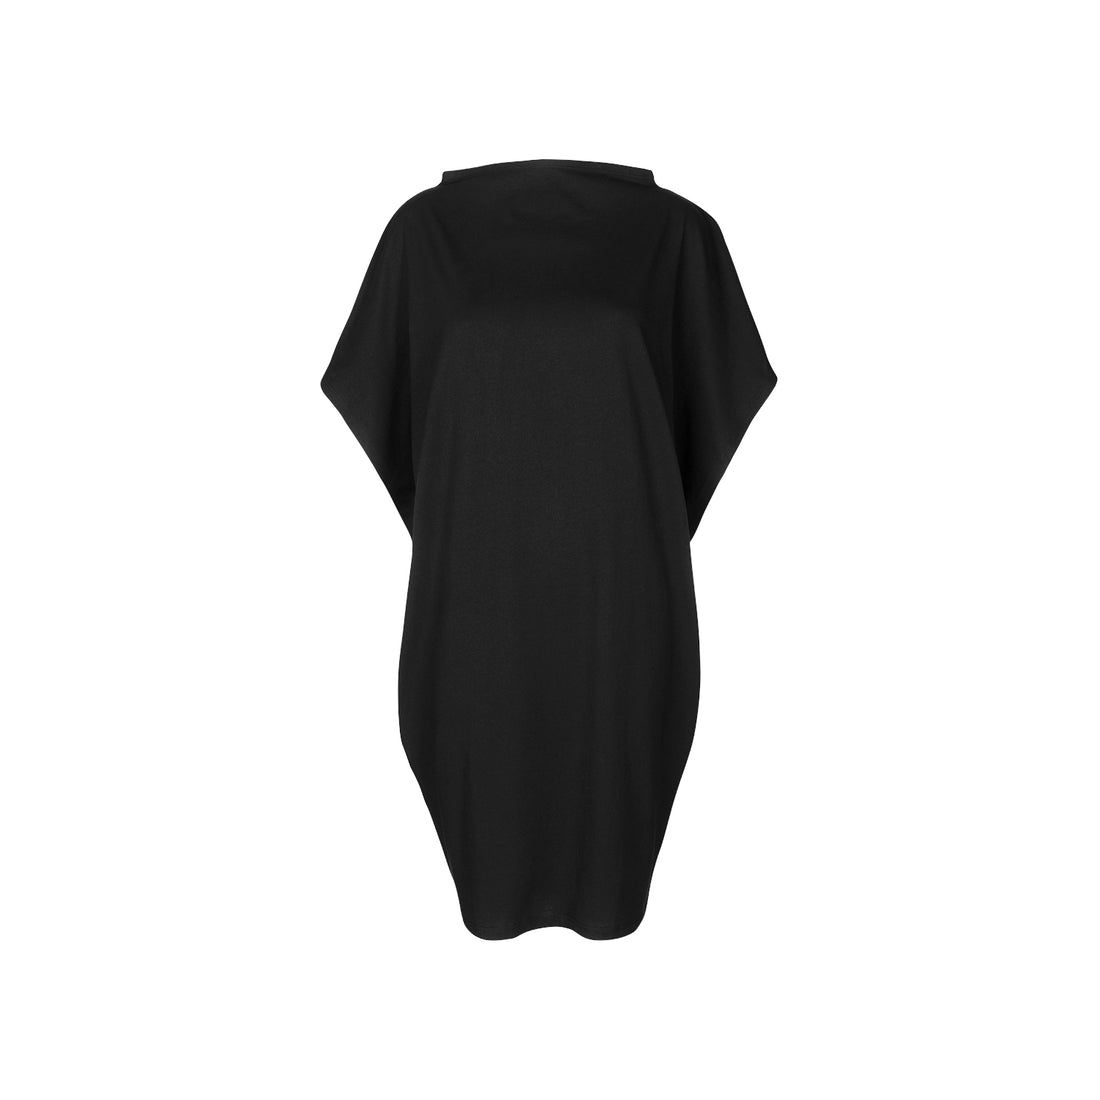 A black boat neck midi dress in organic cotton by Malaika New York